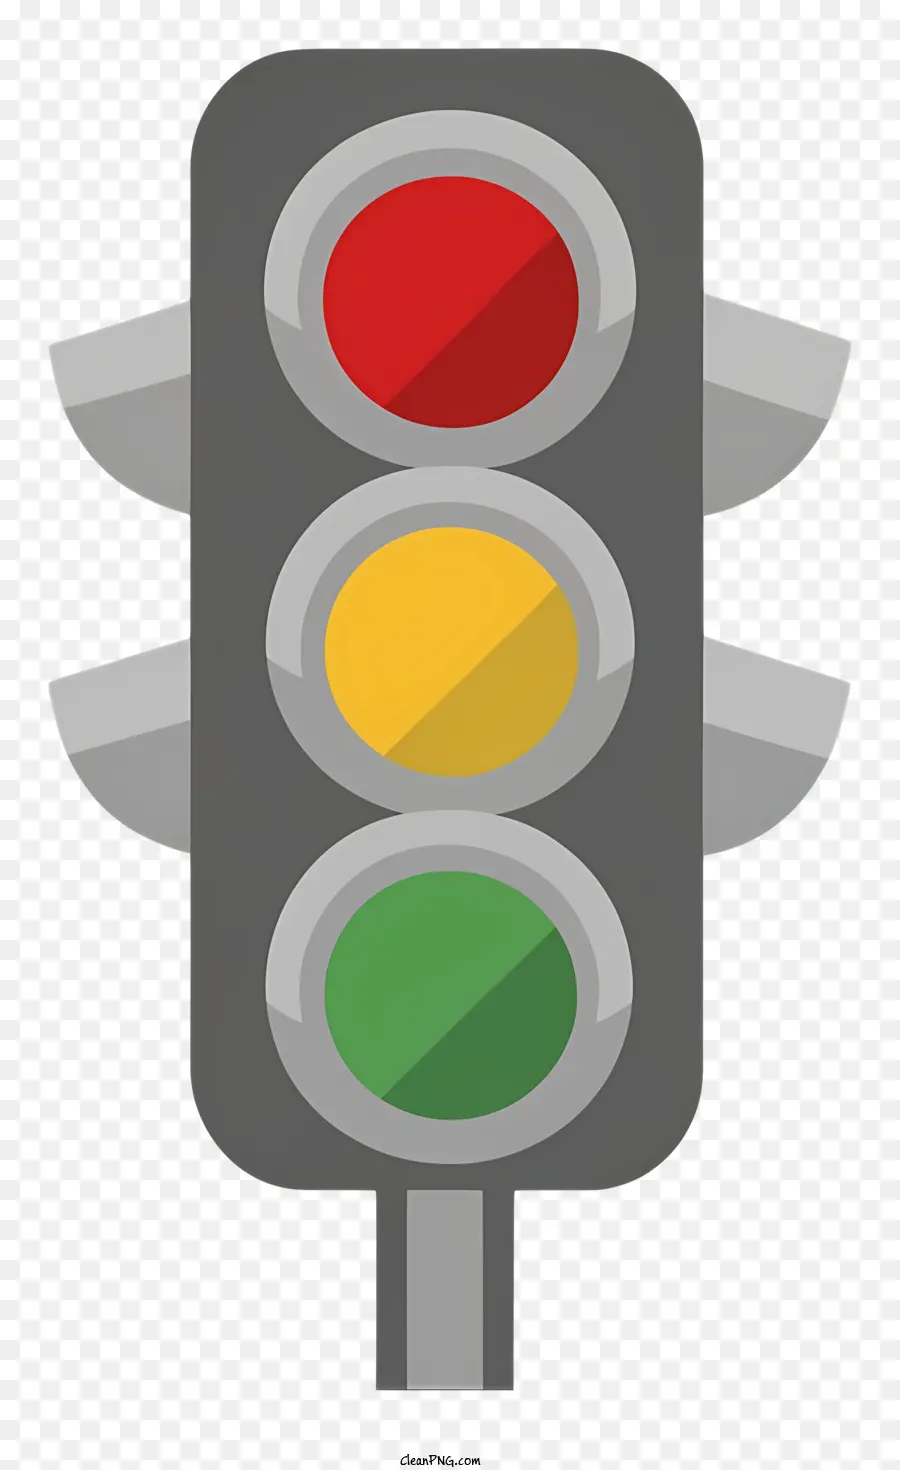 semaforo - Semaforo con luci rosse, gialle e verdi